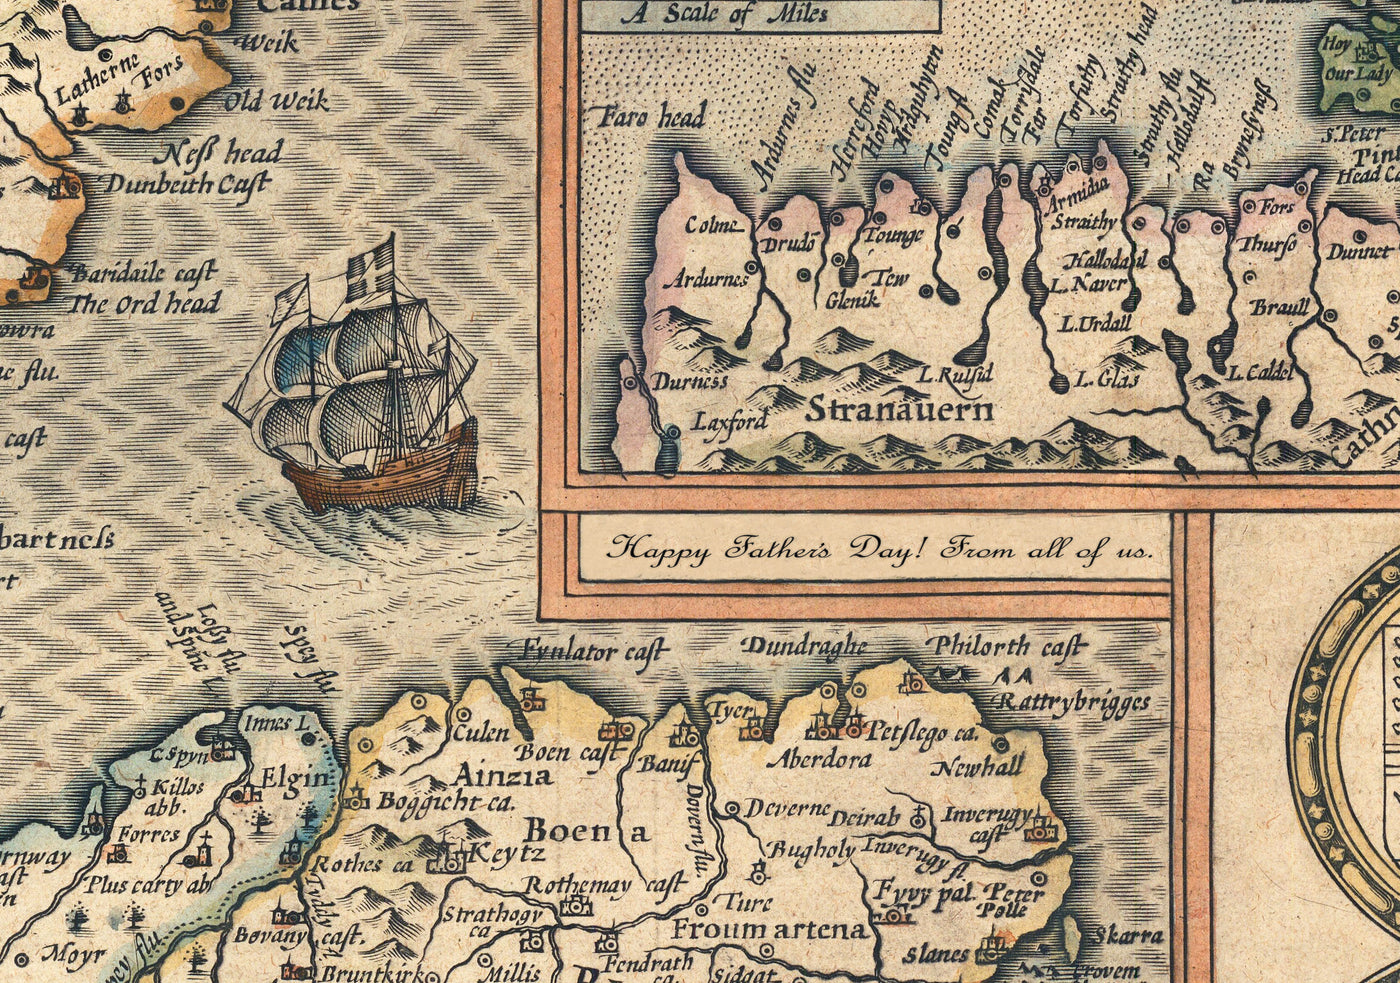 Old Map of the Isle of Skye in 1665 by Joan Blaeu - Portree, Raasay, Soay, Scalpay, Dunvegan